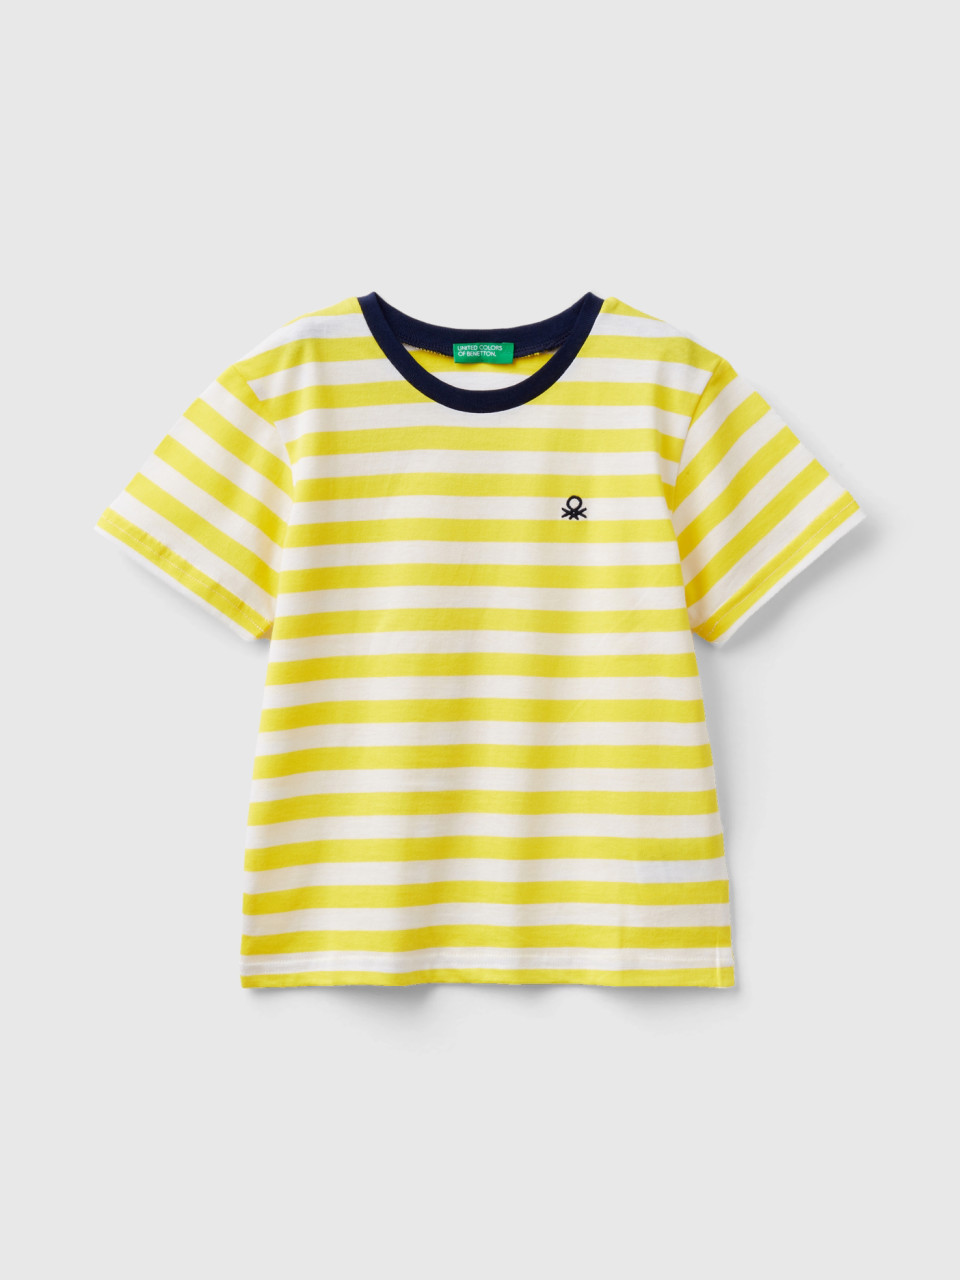 Benetton, Striped 100% Cotton T-shirt, Yellow, Kids